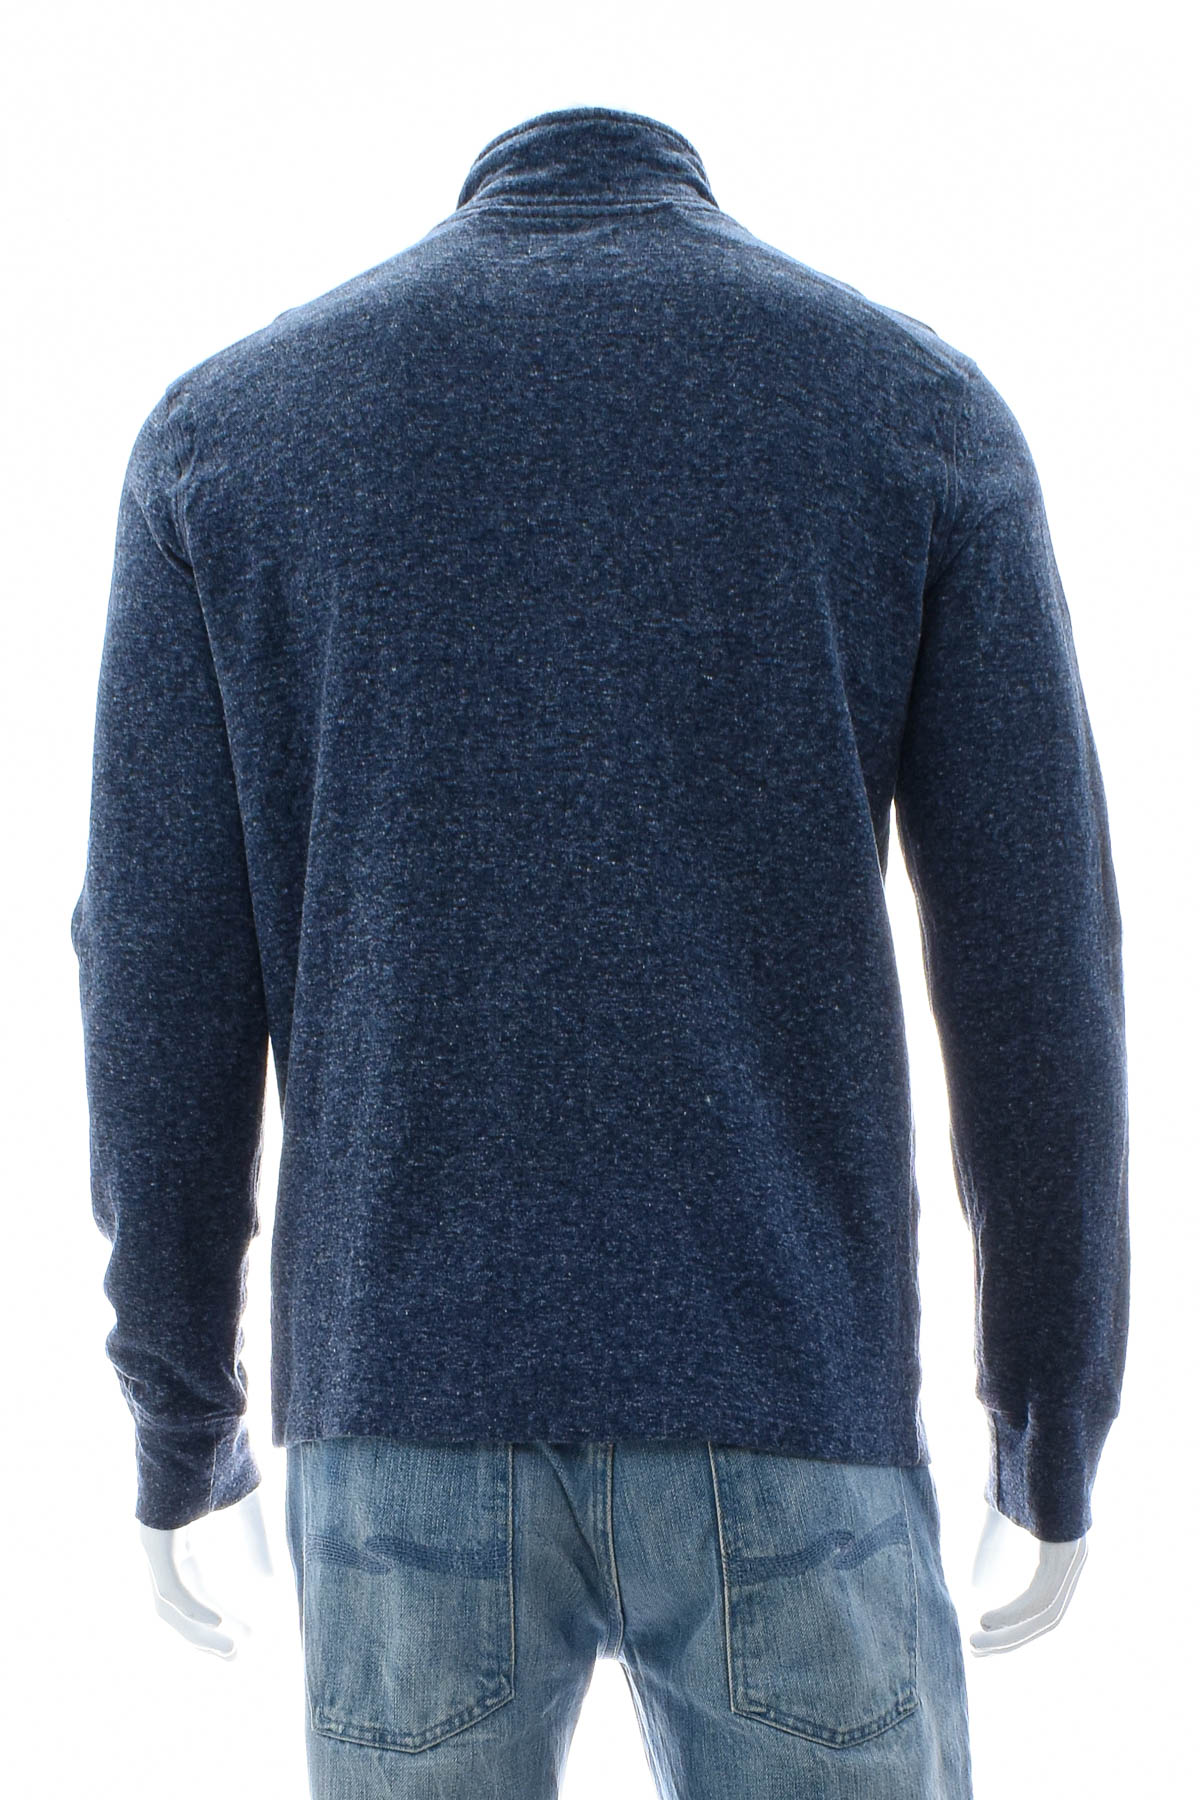 Men's sweater - J.Crew - 1